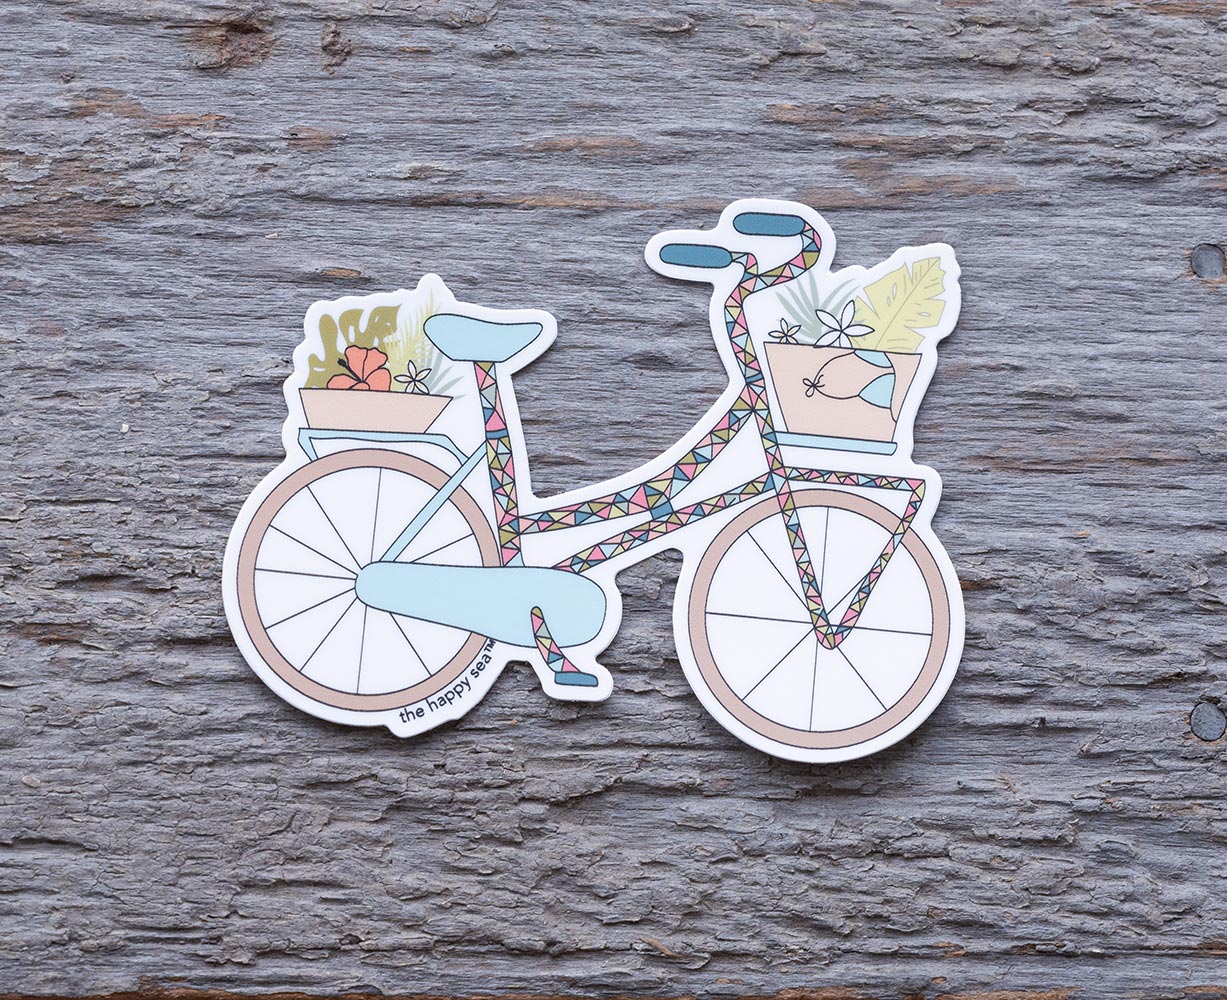 The Happy Sea Tropicalia Bicycle Sticker